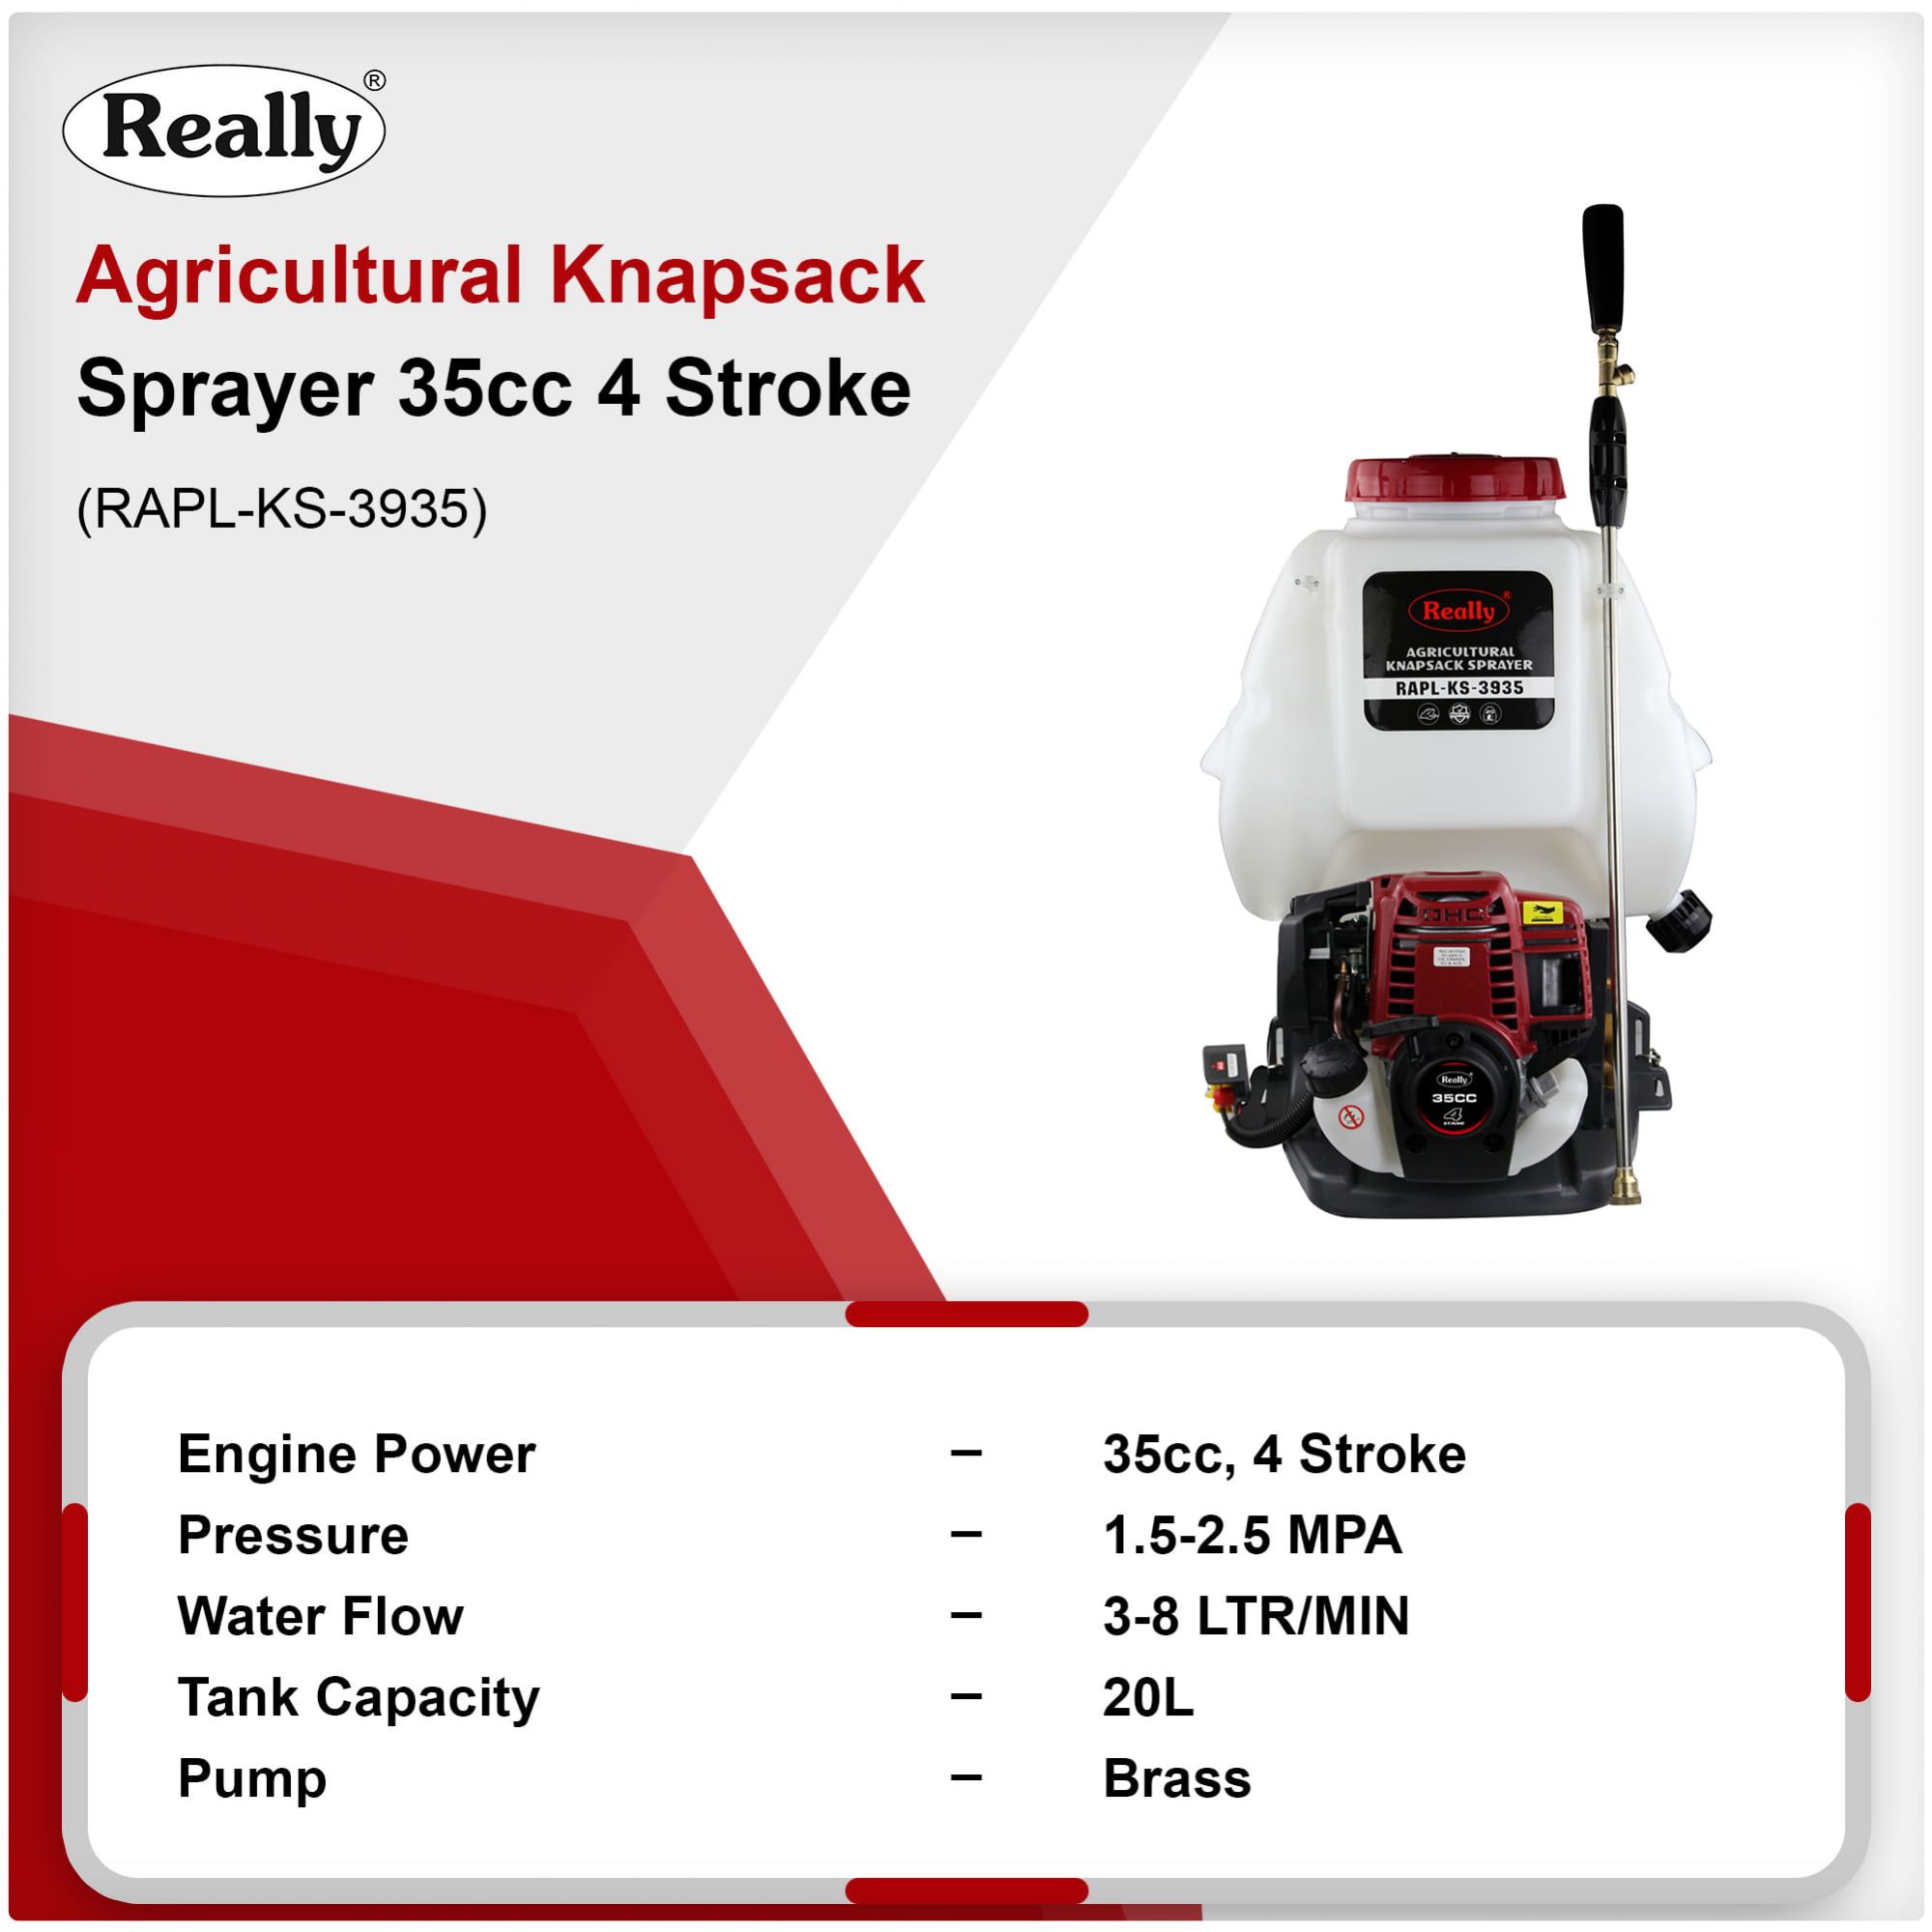 Really Agricultural Knapsack Power Sprayer (RAPL-KS-3935)